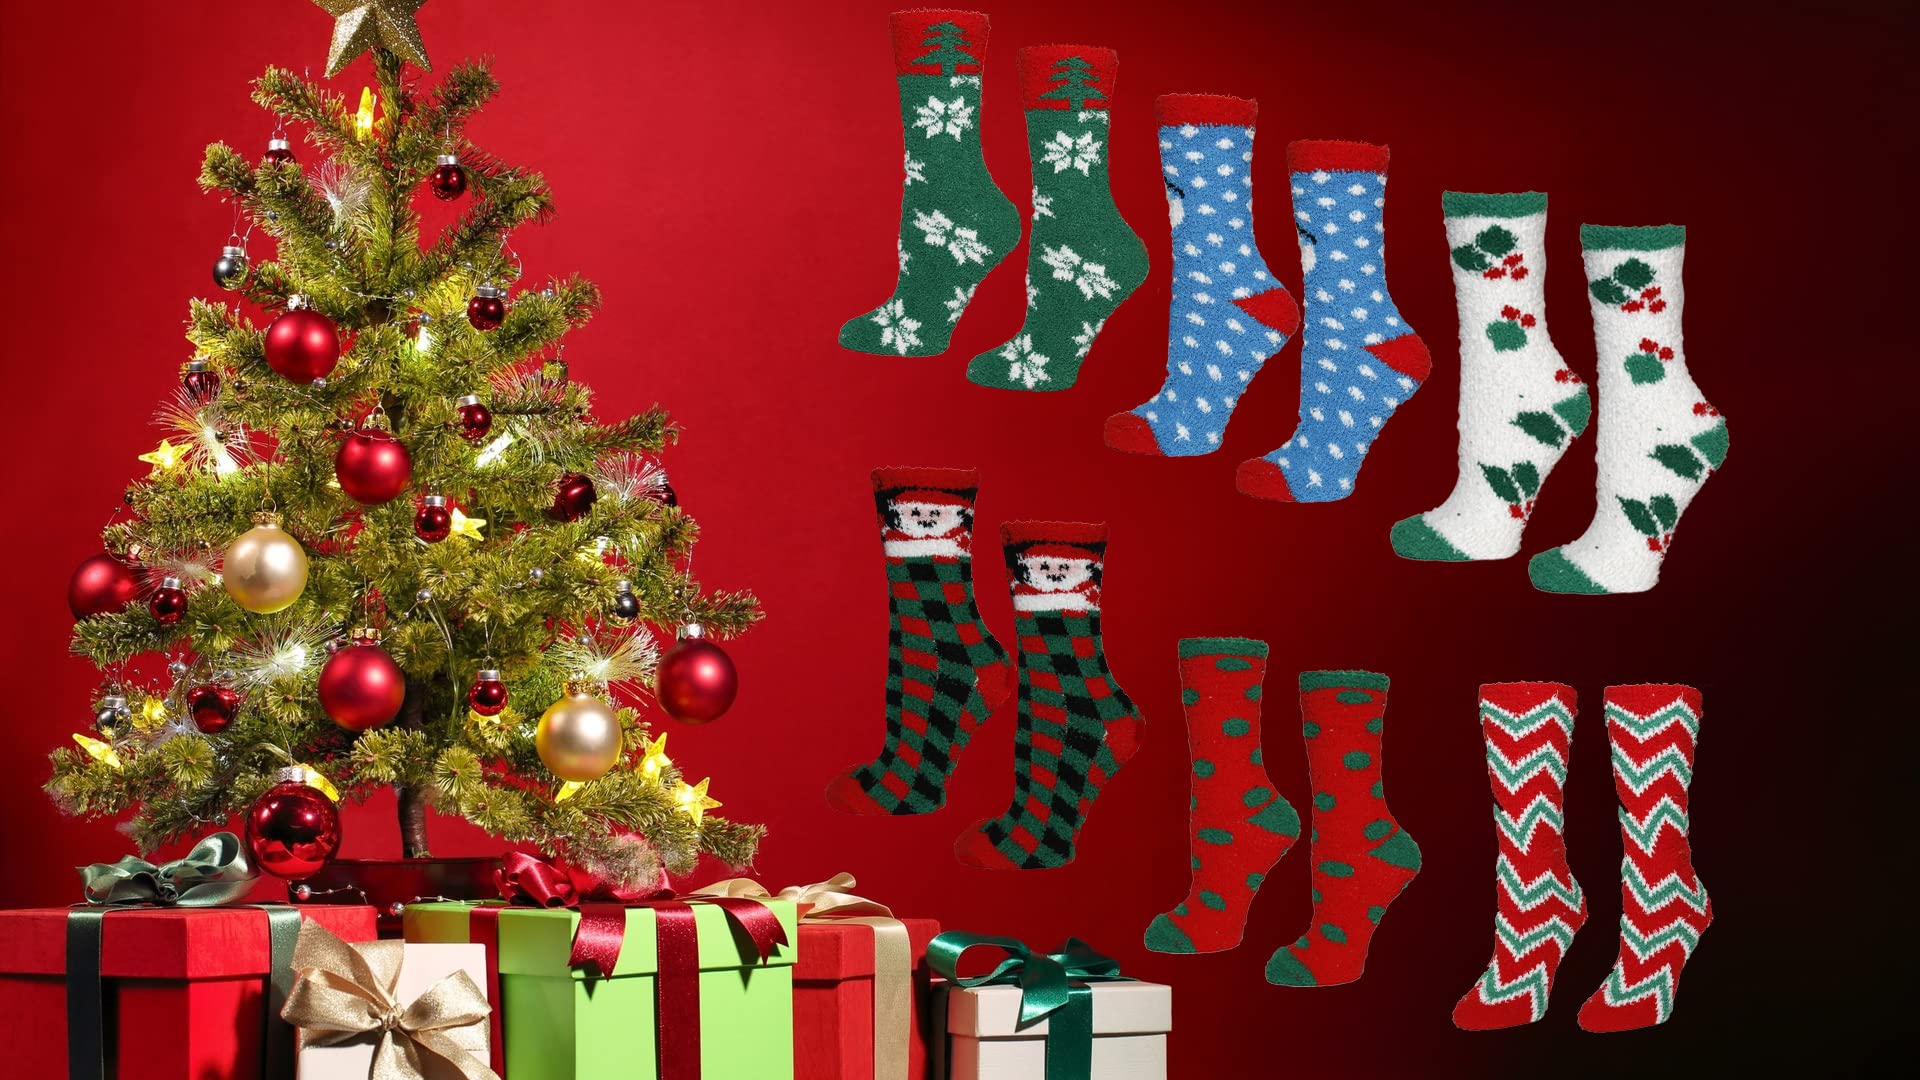 Womens Soft Fuzzy Sock, Holiday Christmas Slipper Socks, holiday